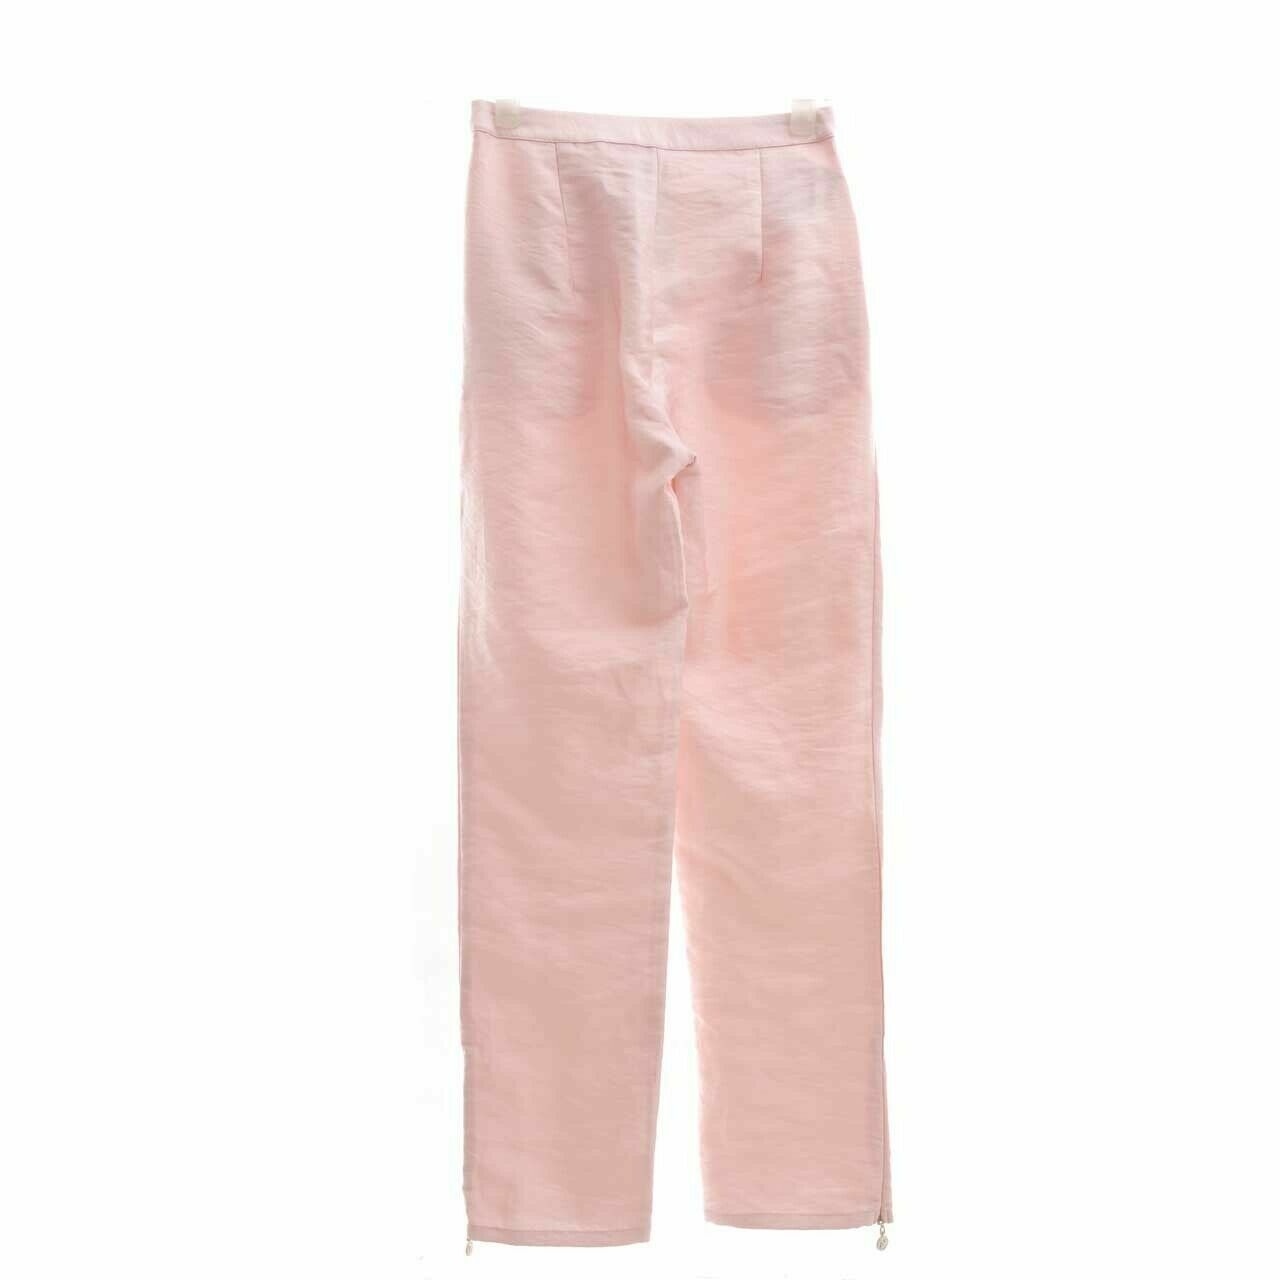 Aere Pink Pants